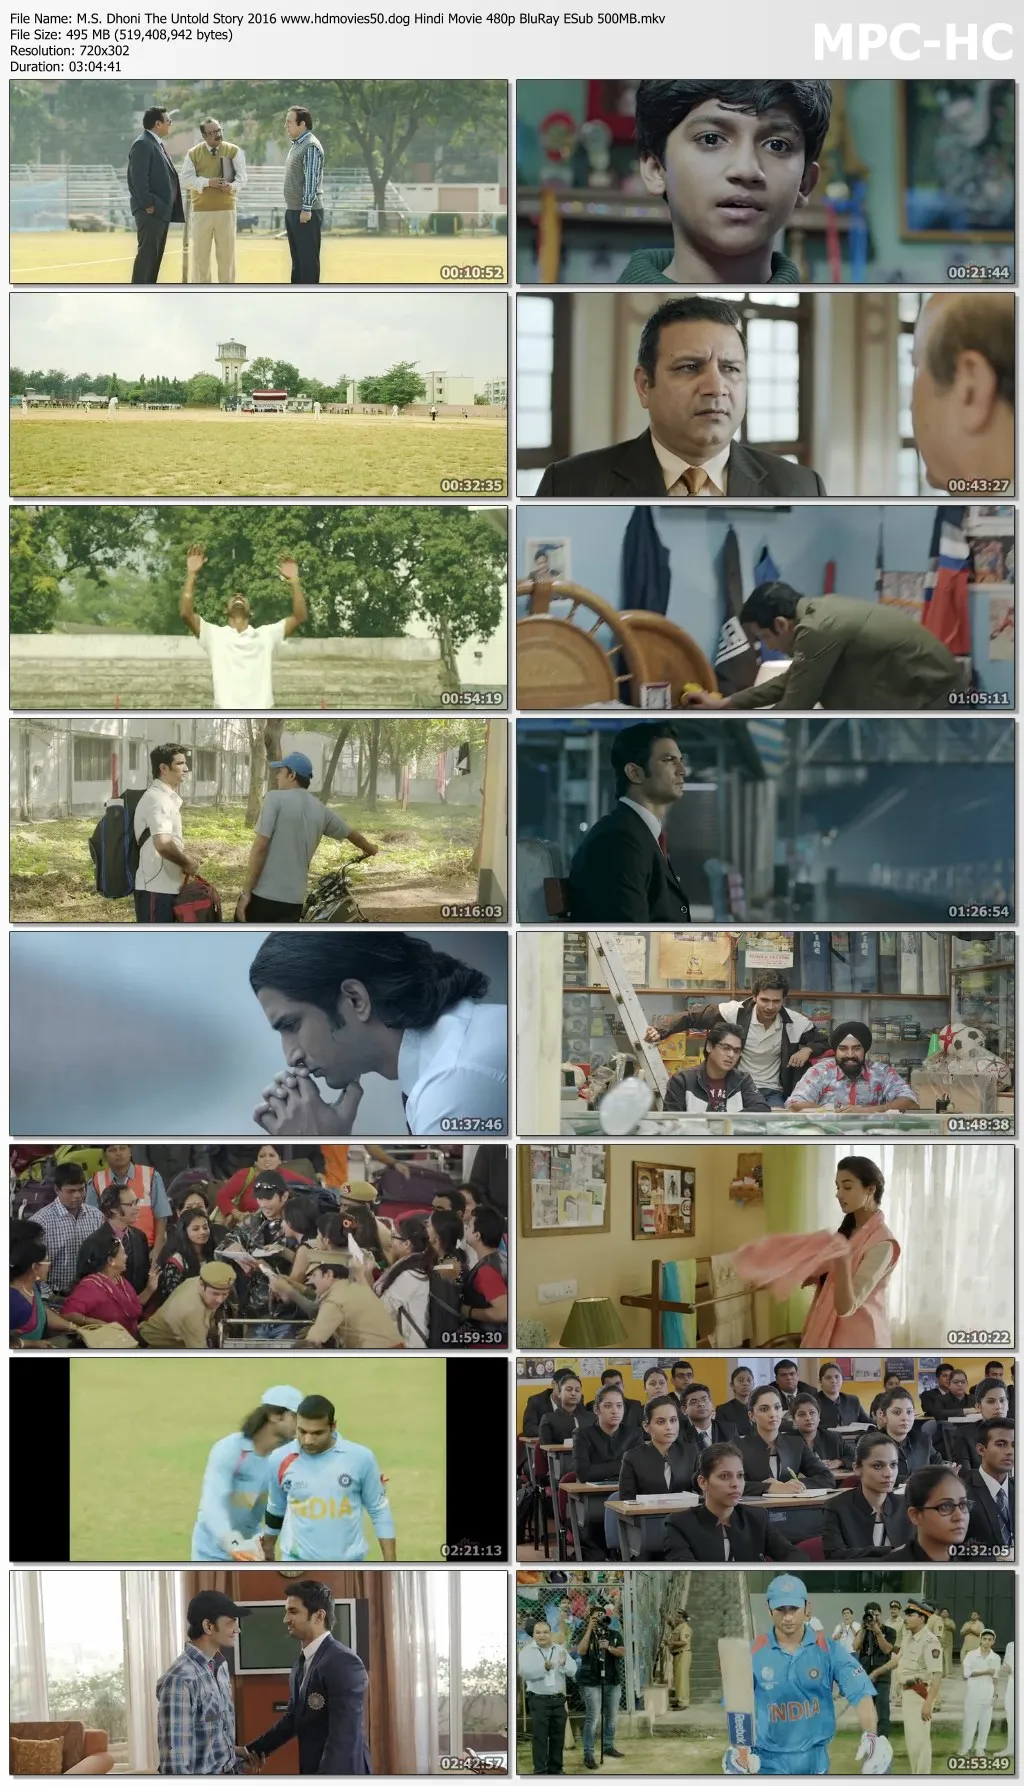 M.S. Dhoni The Untold Story 2016 Hindi Movie 720p BluRay ESub 1.4GB Download